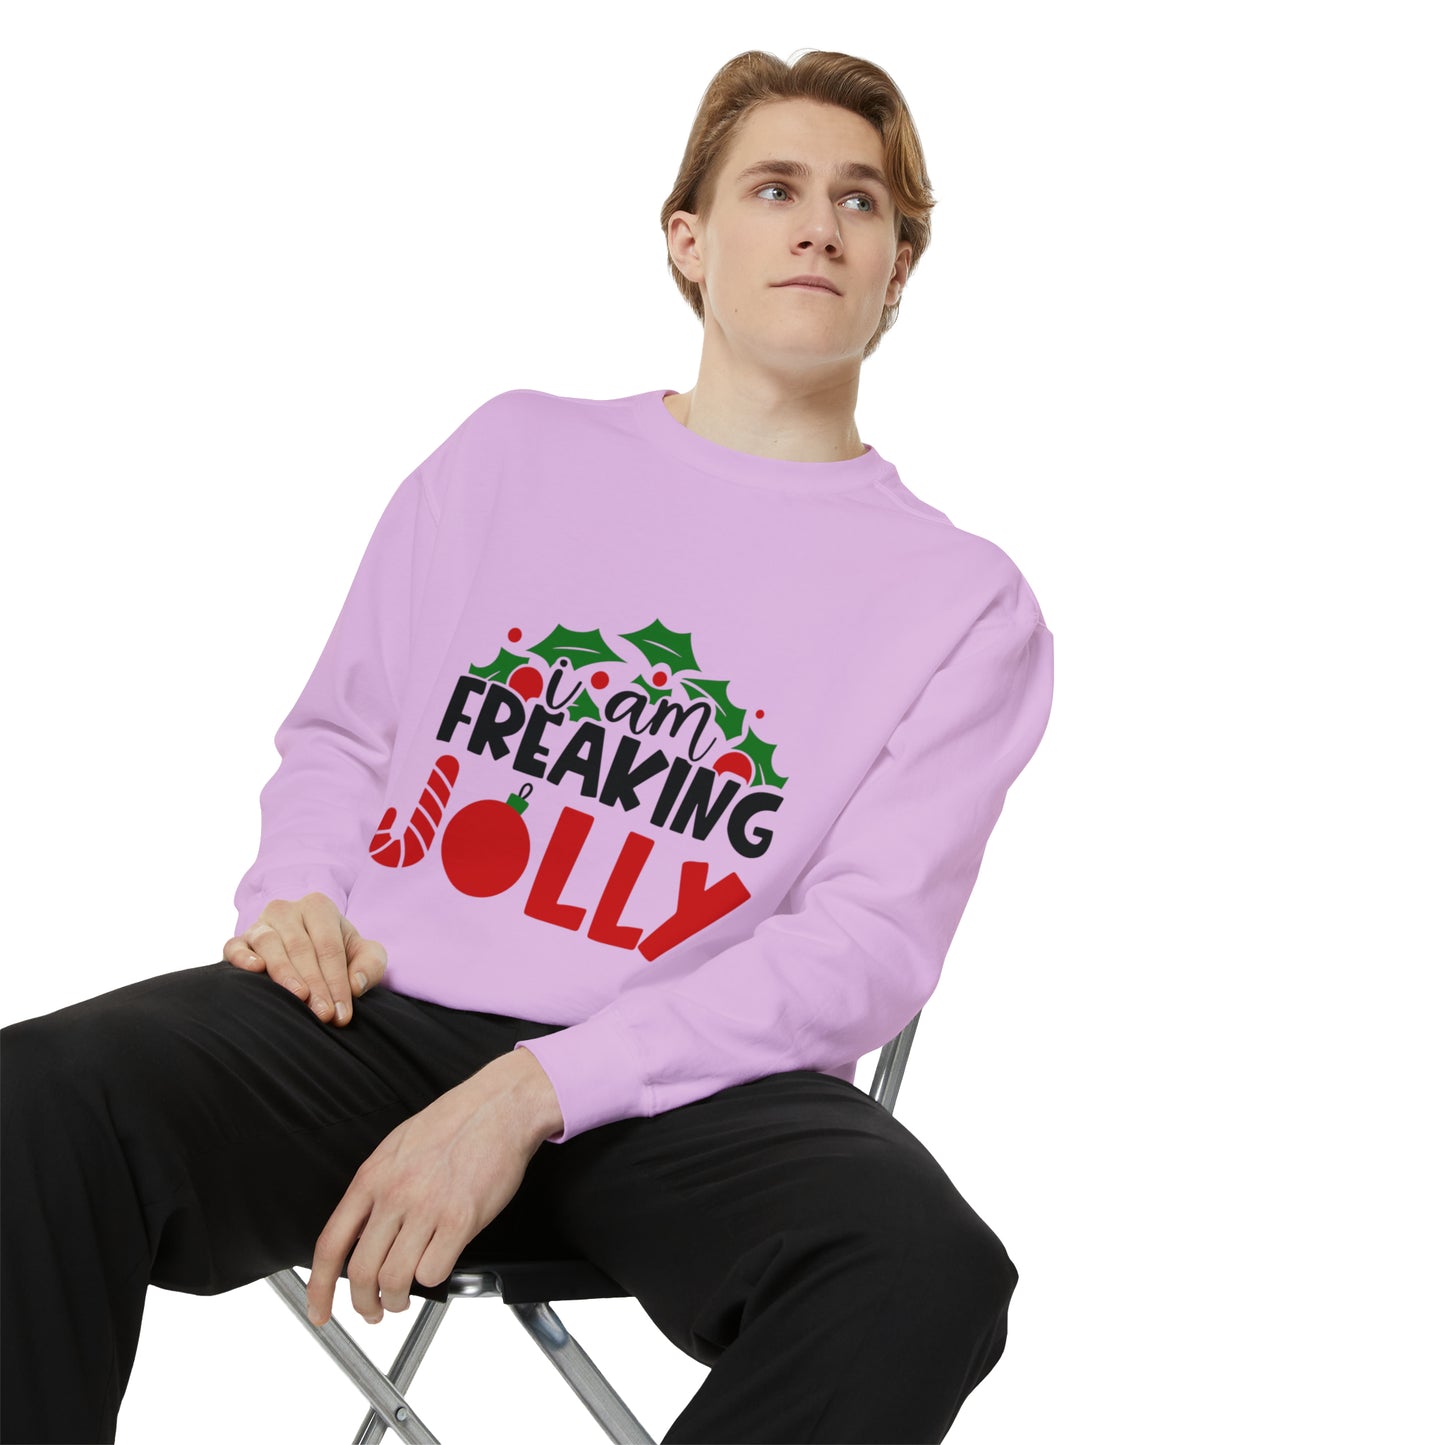 I Am Freaking Jolly Unisex Garment-Dyed Sweatshirt